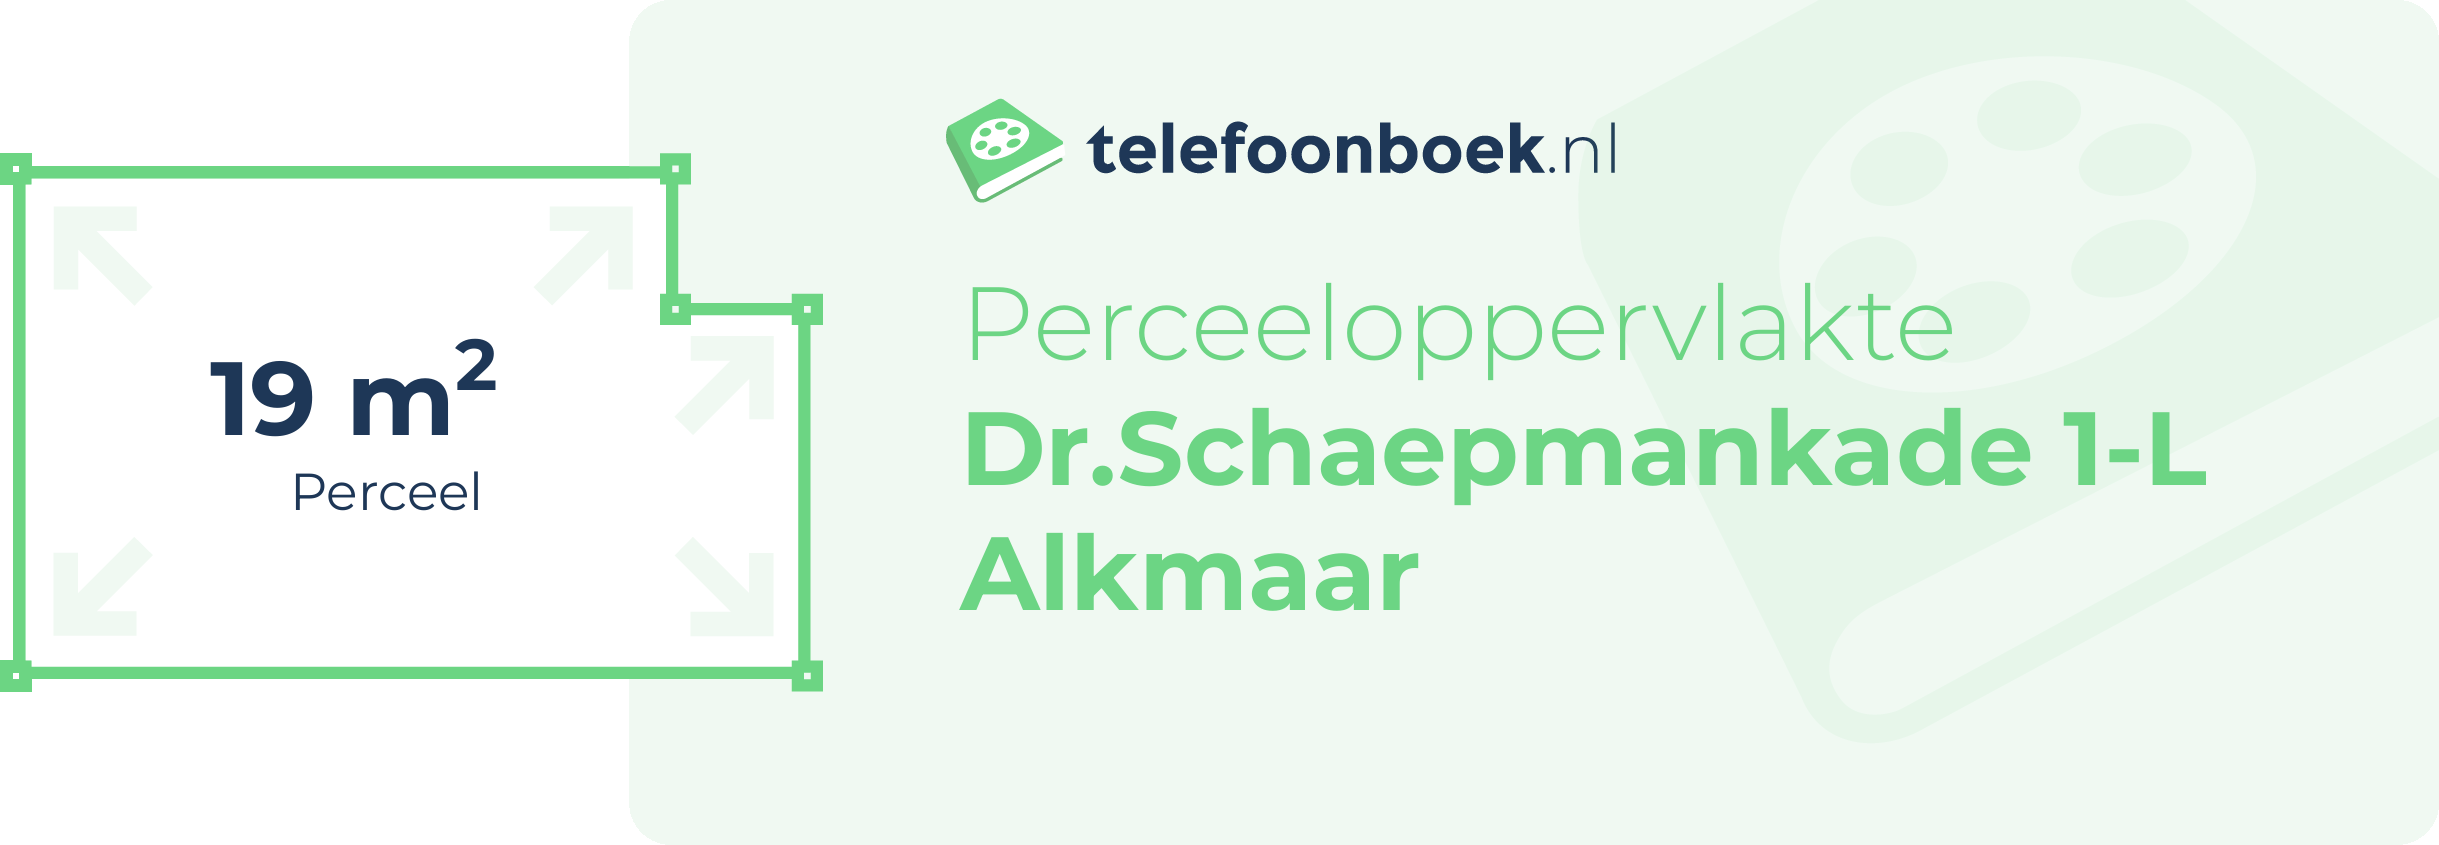 Perceeloppervlakte Dr.Schaepmankade 1-L Alkmaar